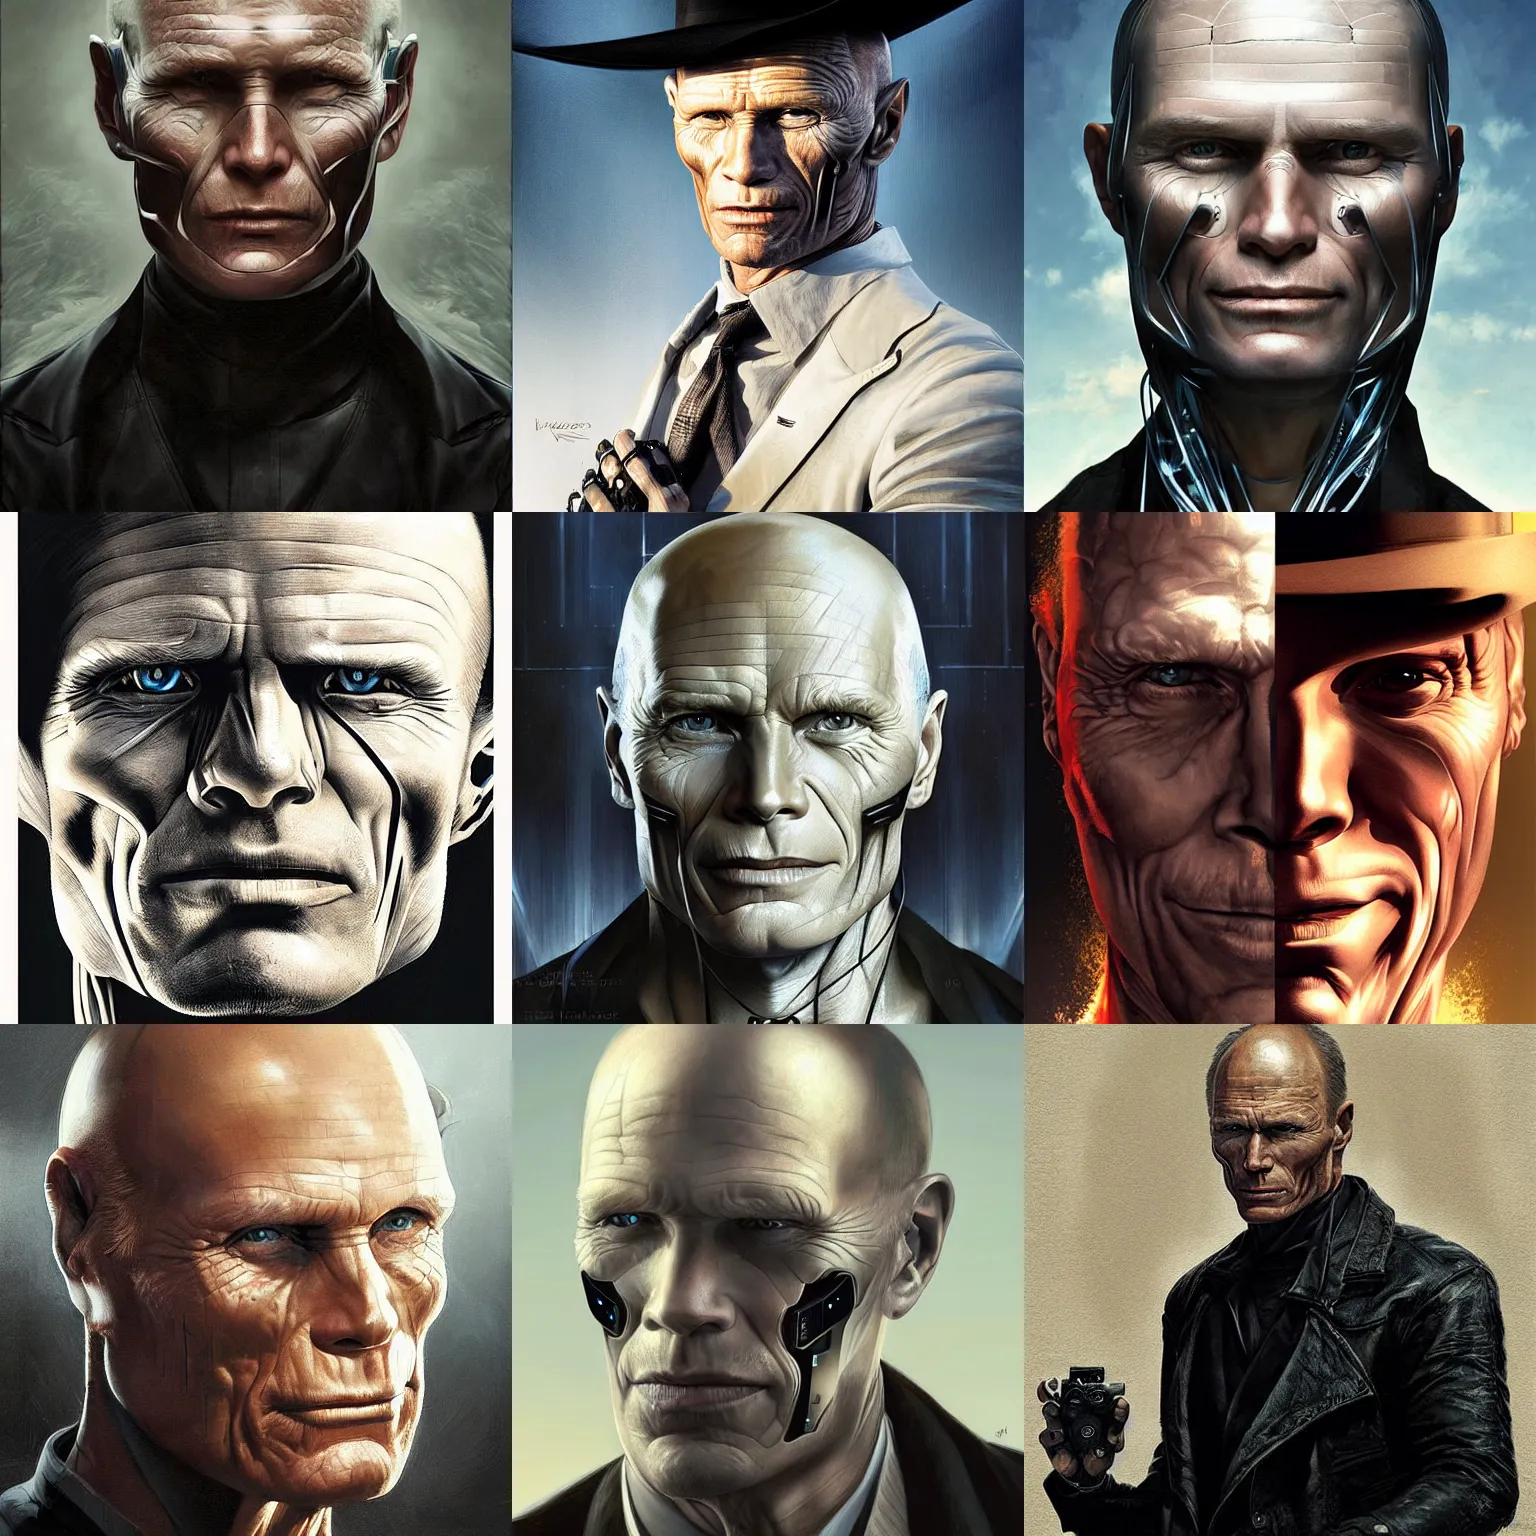 Prompt: ed harris as man in black, half - human half - robot half - cyborg, in westworld, digital art, portrait by artgerm and karol bak